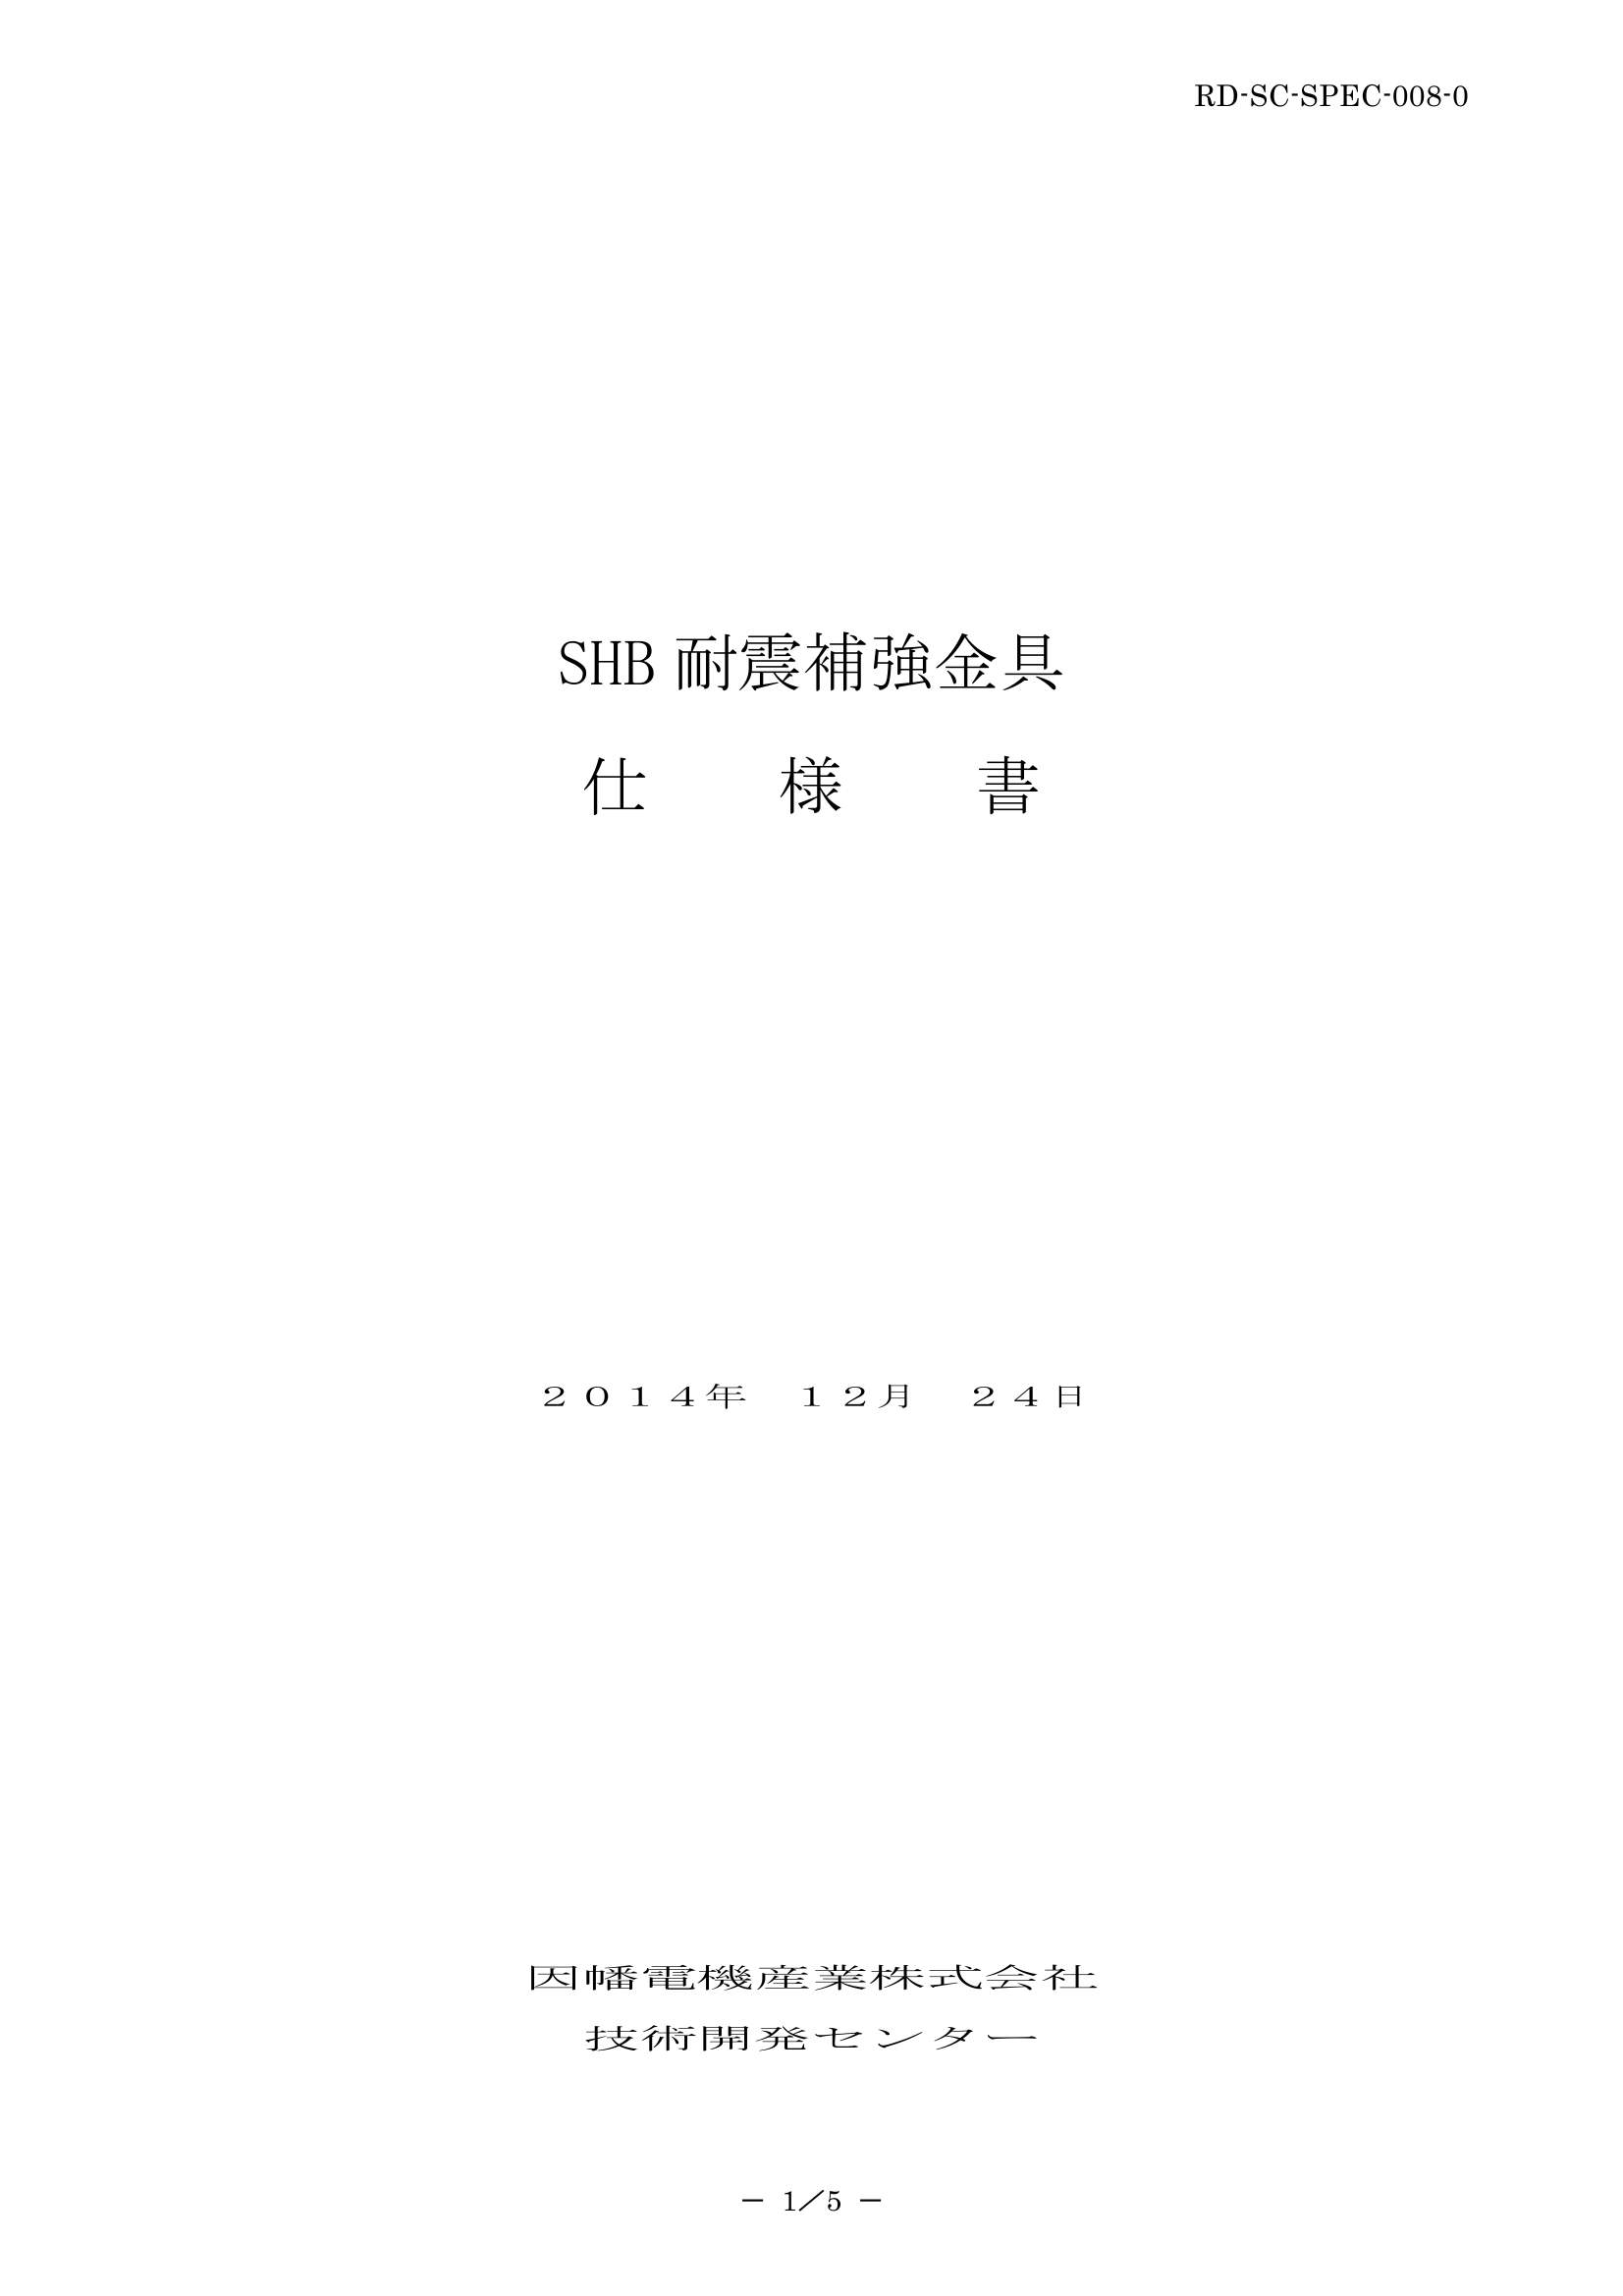 SHB-H_HF_ML_仕様書_20141225.pdf